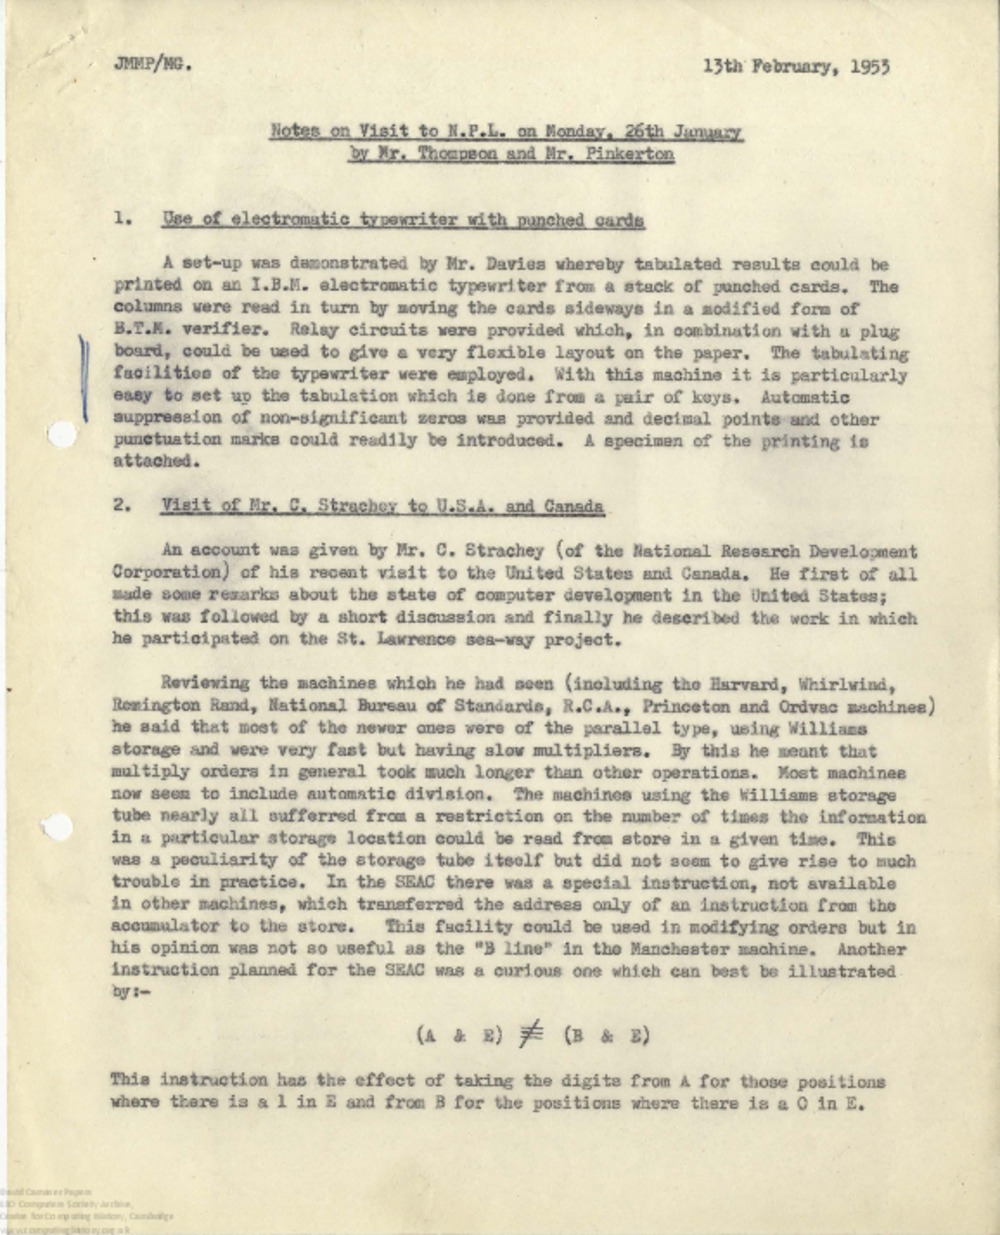 Article: 63093 Visit to N.P.L., 26th Jan 1953